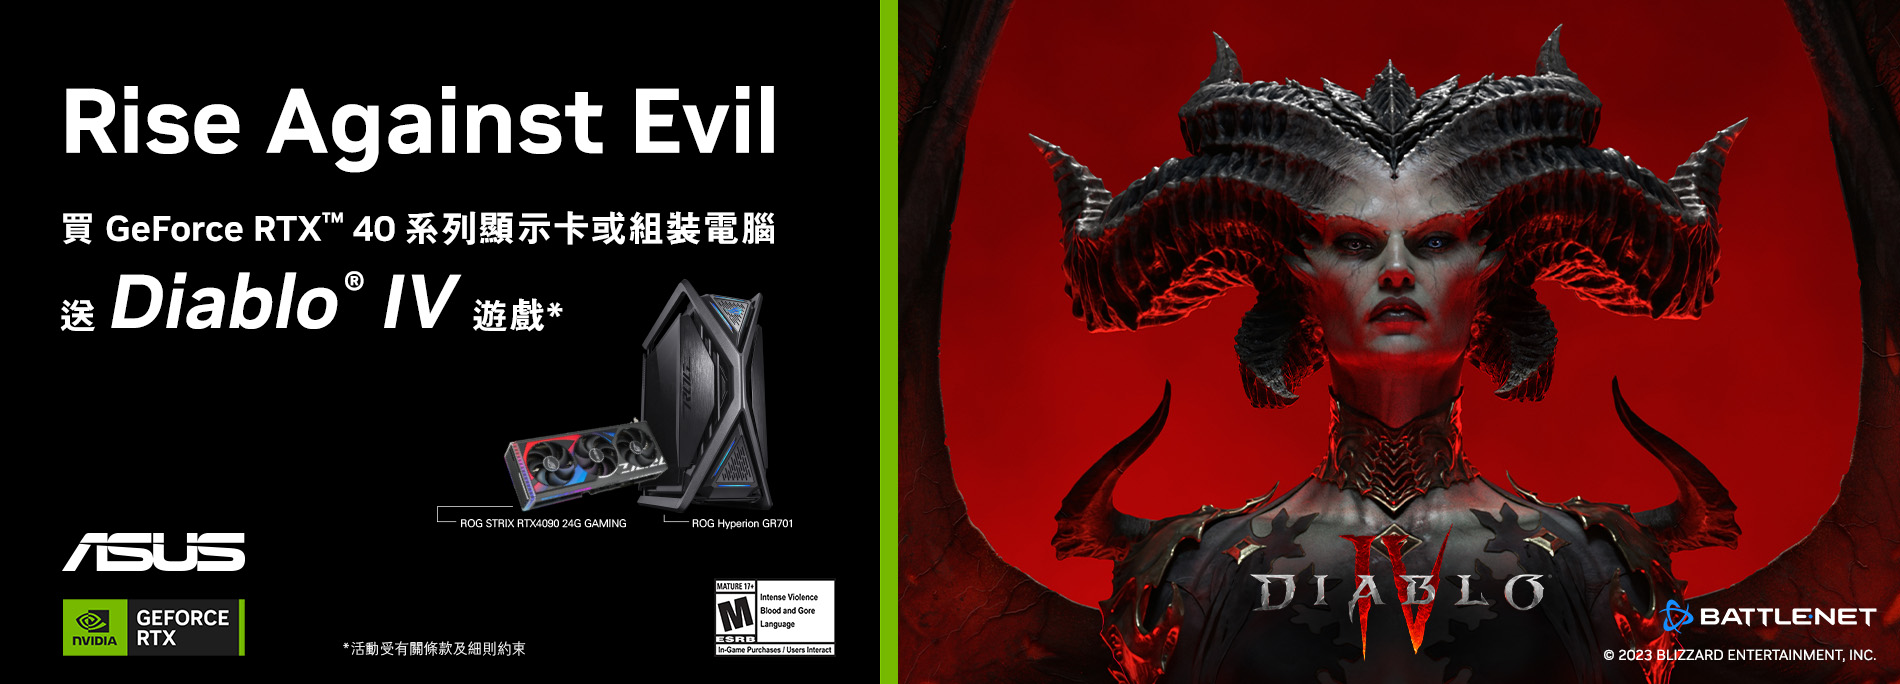 【Rise Against Evil】買 GEFORCE RTX™ 40 SERIES顯示卡或組裝電腦送Diablo IV遊戲